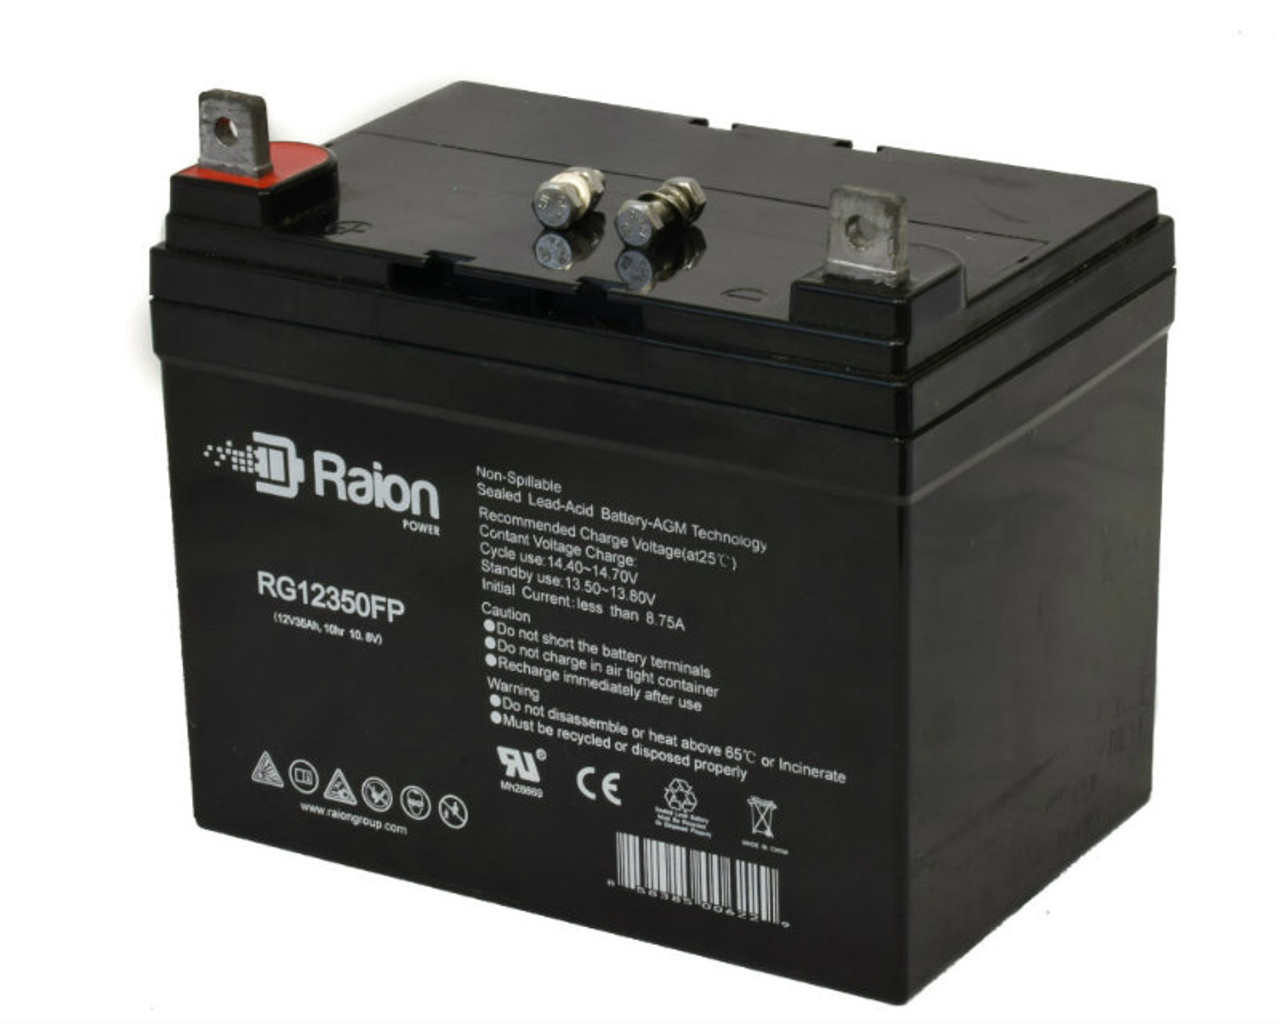 Raion Power Replacement 12V 35Ah RG12350FP Battery for PBQ HR 40-12